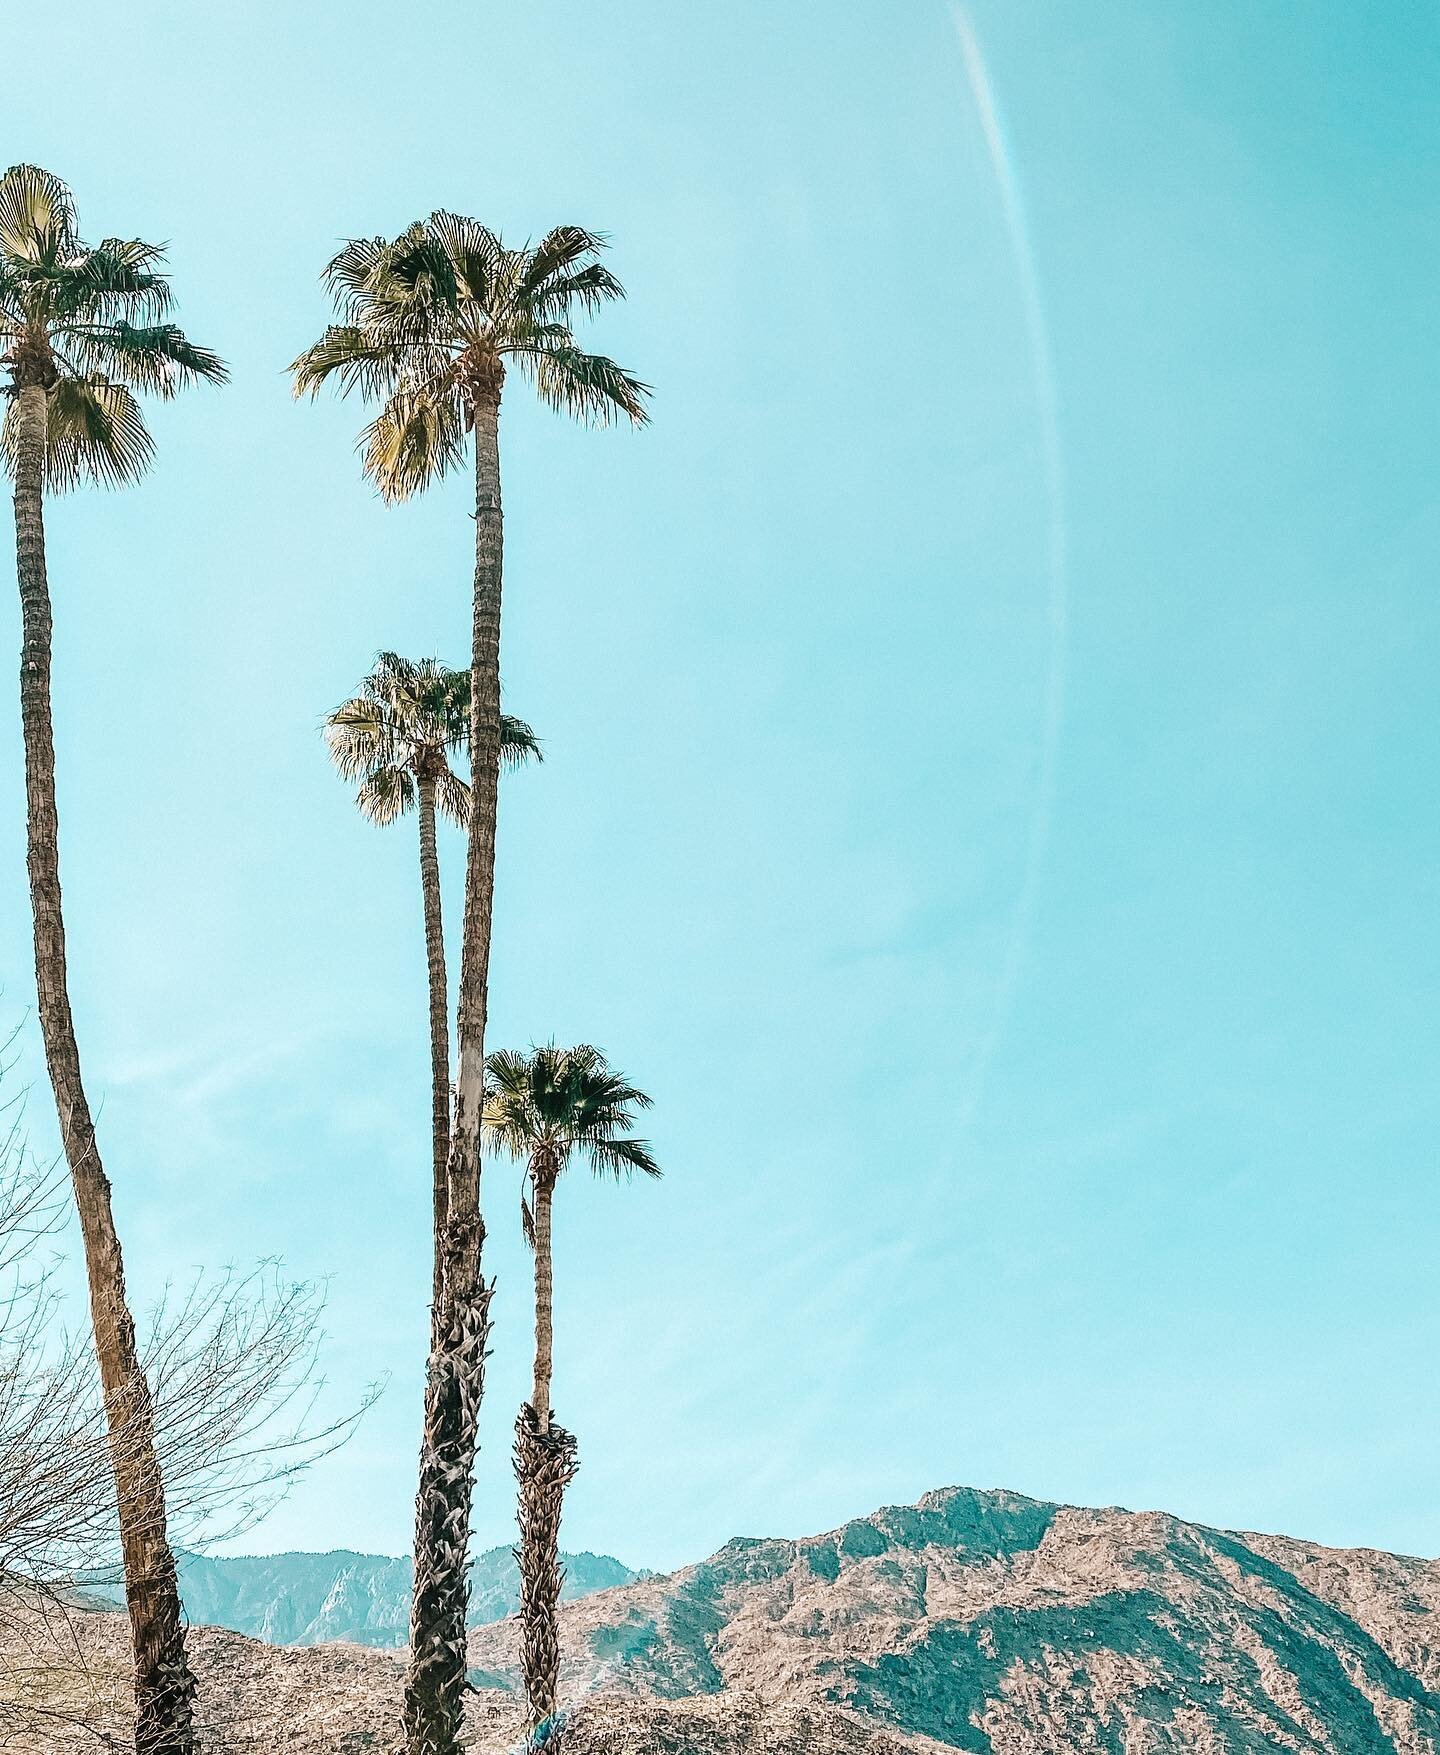 Daydreaming of the desert 🌵 see you in one week Palm Springs! ☀️
.
.
.
#rad #palmsprings #travel #travelphotography #travelgram #travelblogger #california #californiaadventure #palmdesert #desertlife